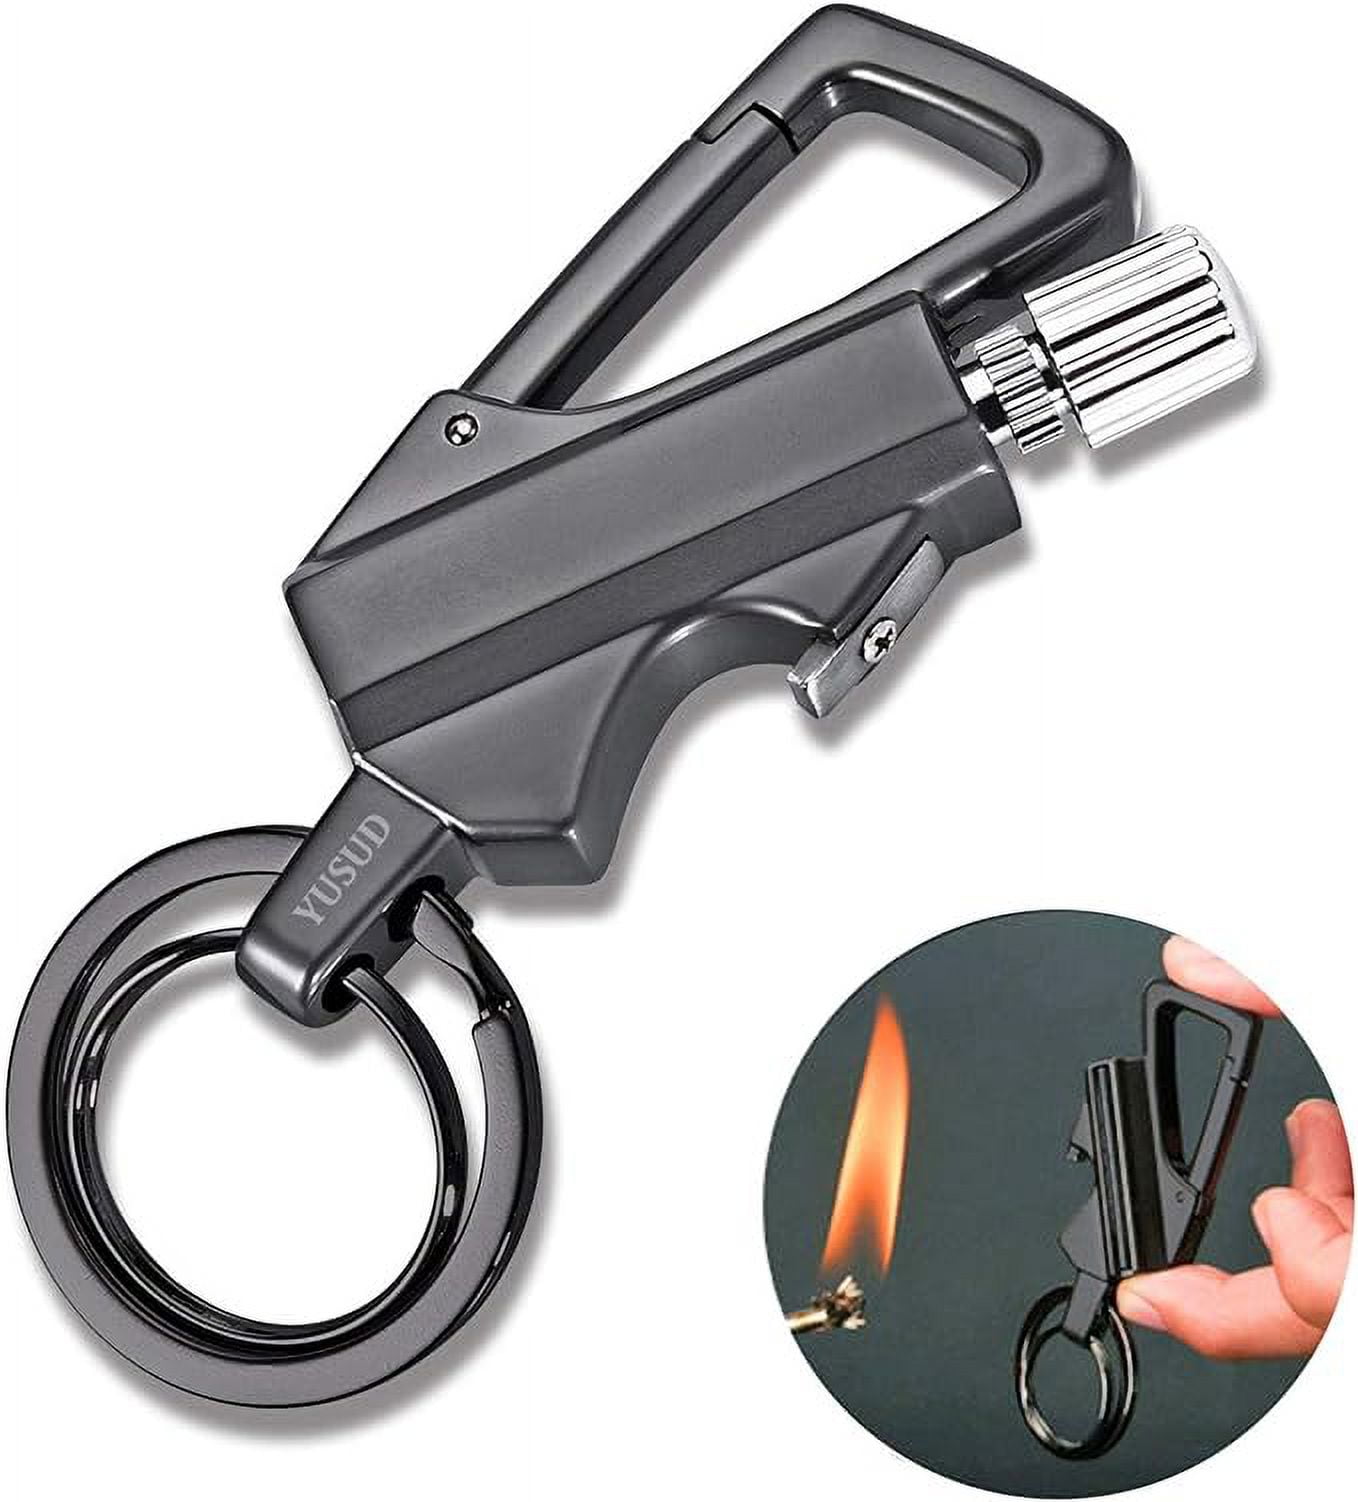  Permanent Match, Pack Of 5, The Forever Lighter, Emergency  Fire Starter Striker Set, Metal Keychain Unlimited Waterproof Stick